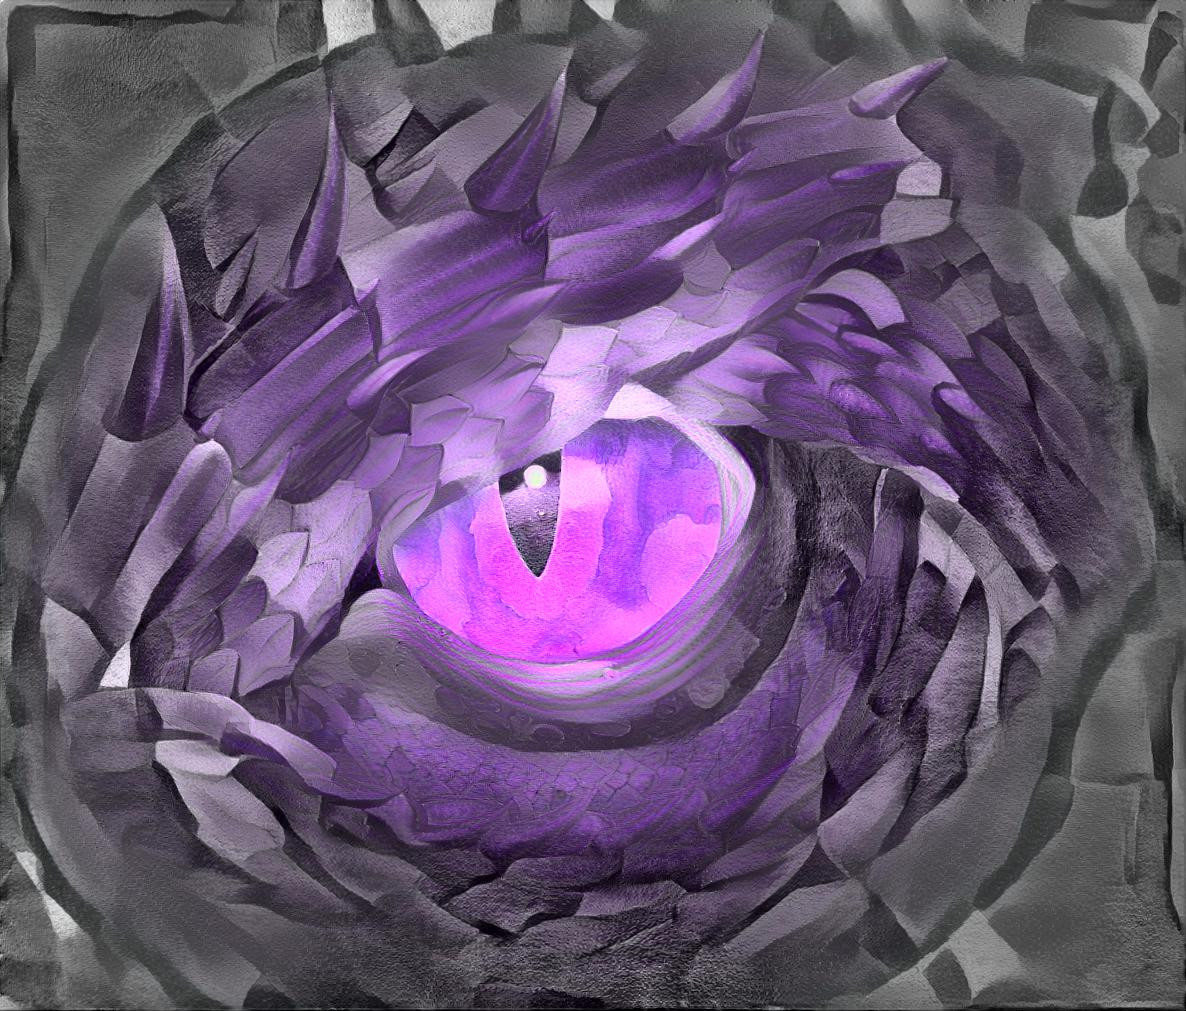 painted purple dragon eye